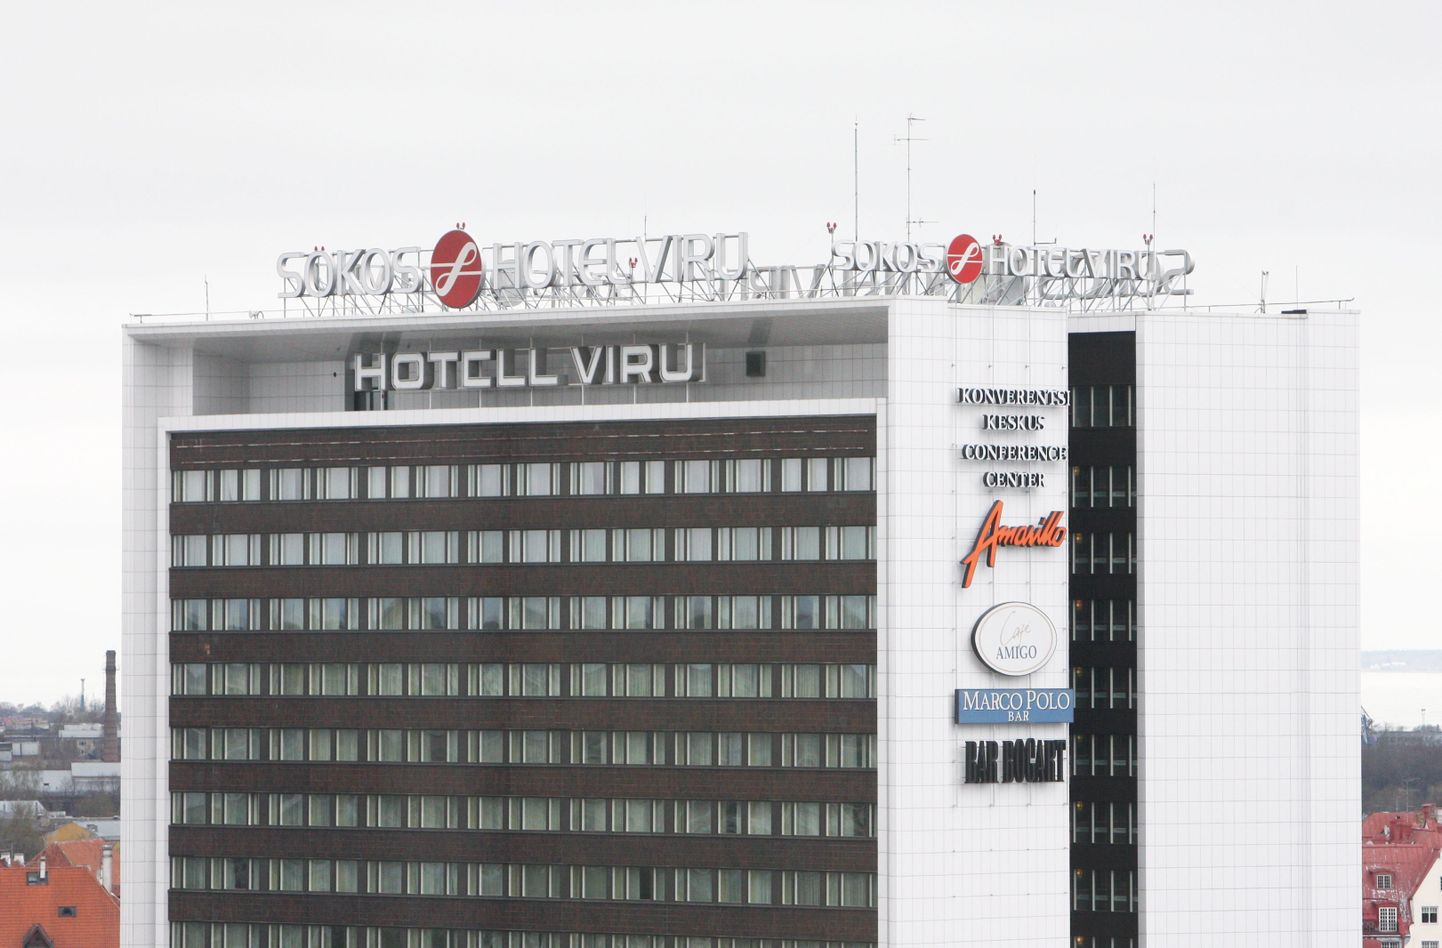 Viru Hotell.